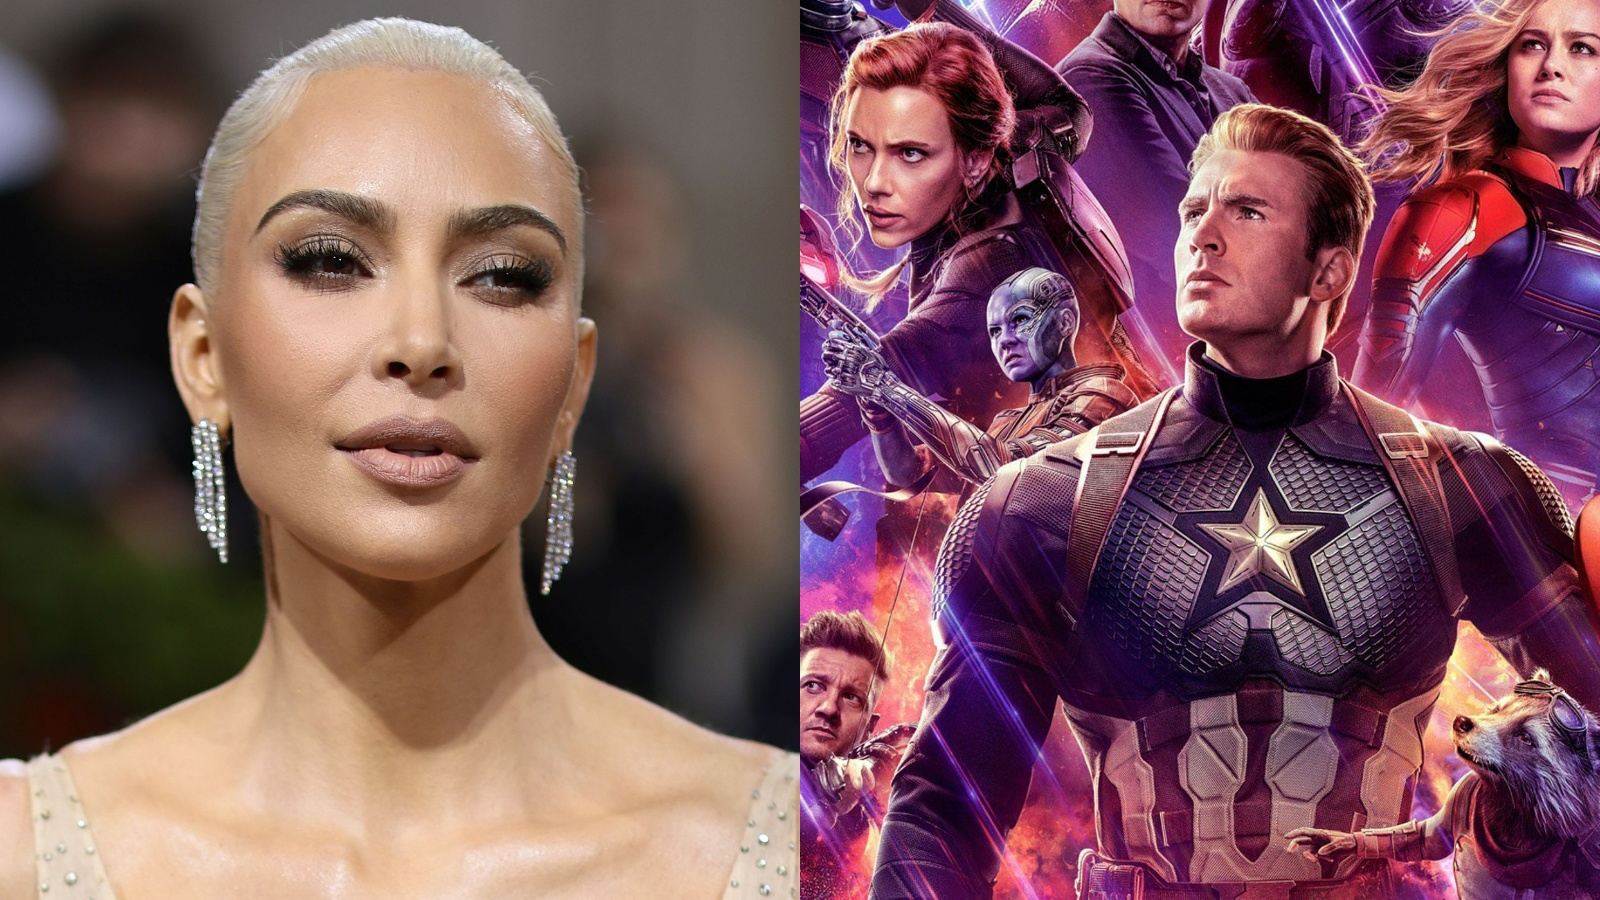 Kim Kardashian/Avengers: Endgame cast